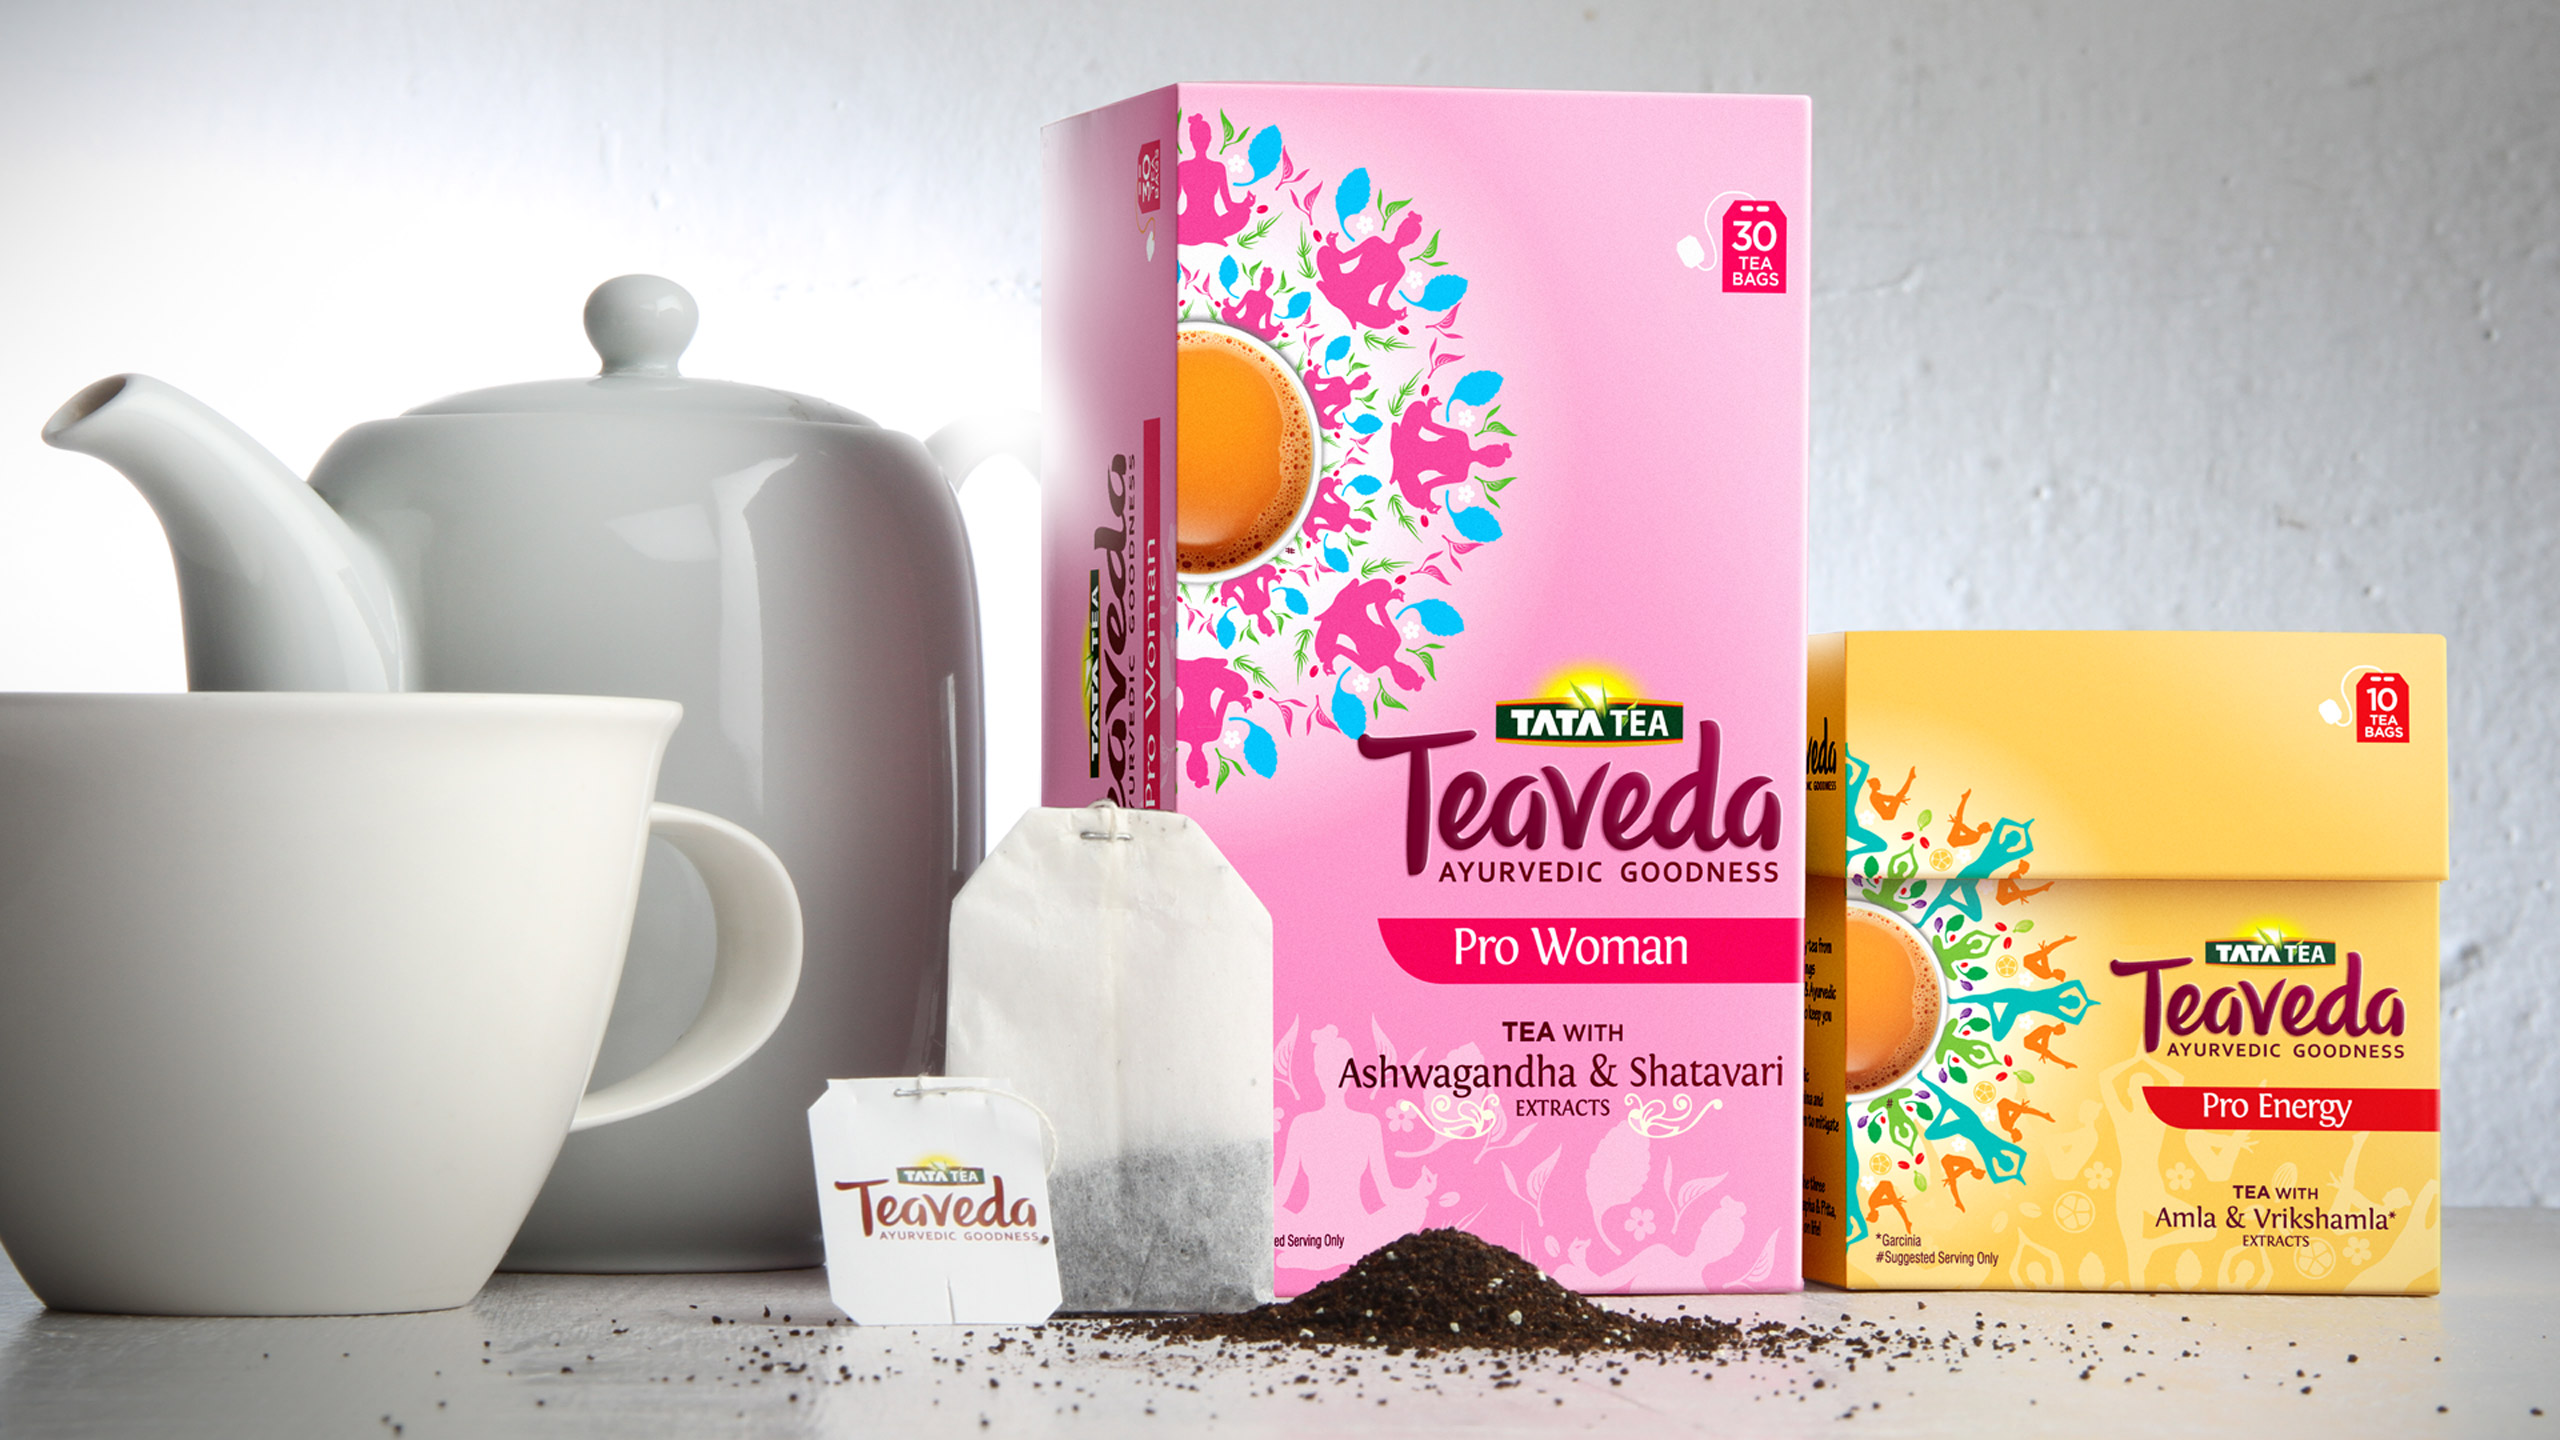 TATA TEA Teaveda Pro Woman and Teaveda Pro energy product branding and packaging design